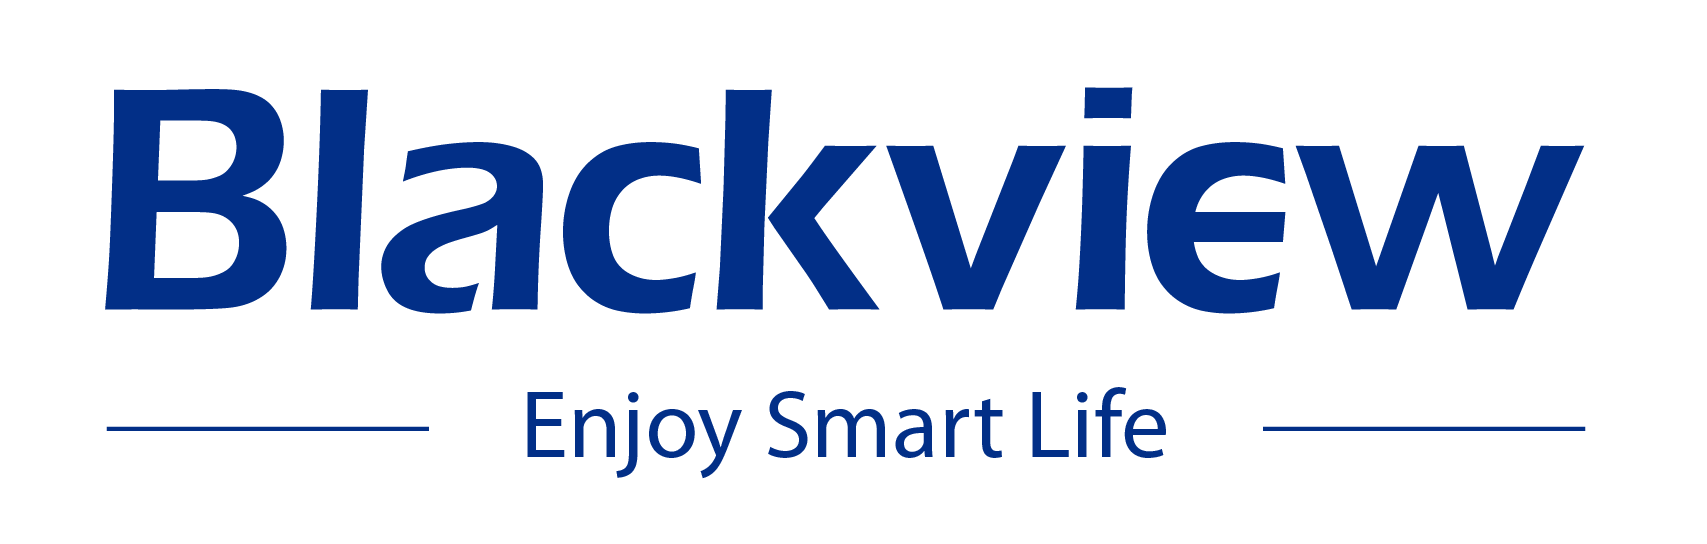 Blackview logo